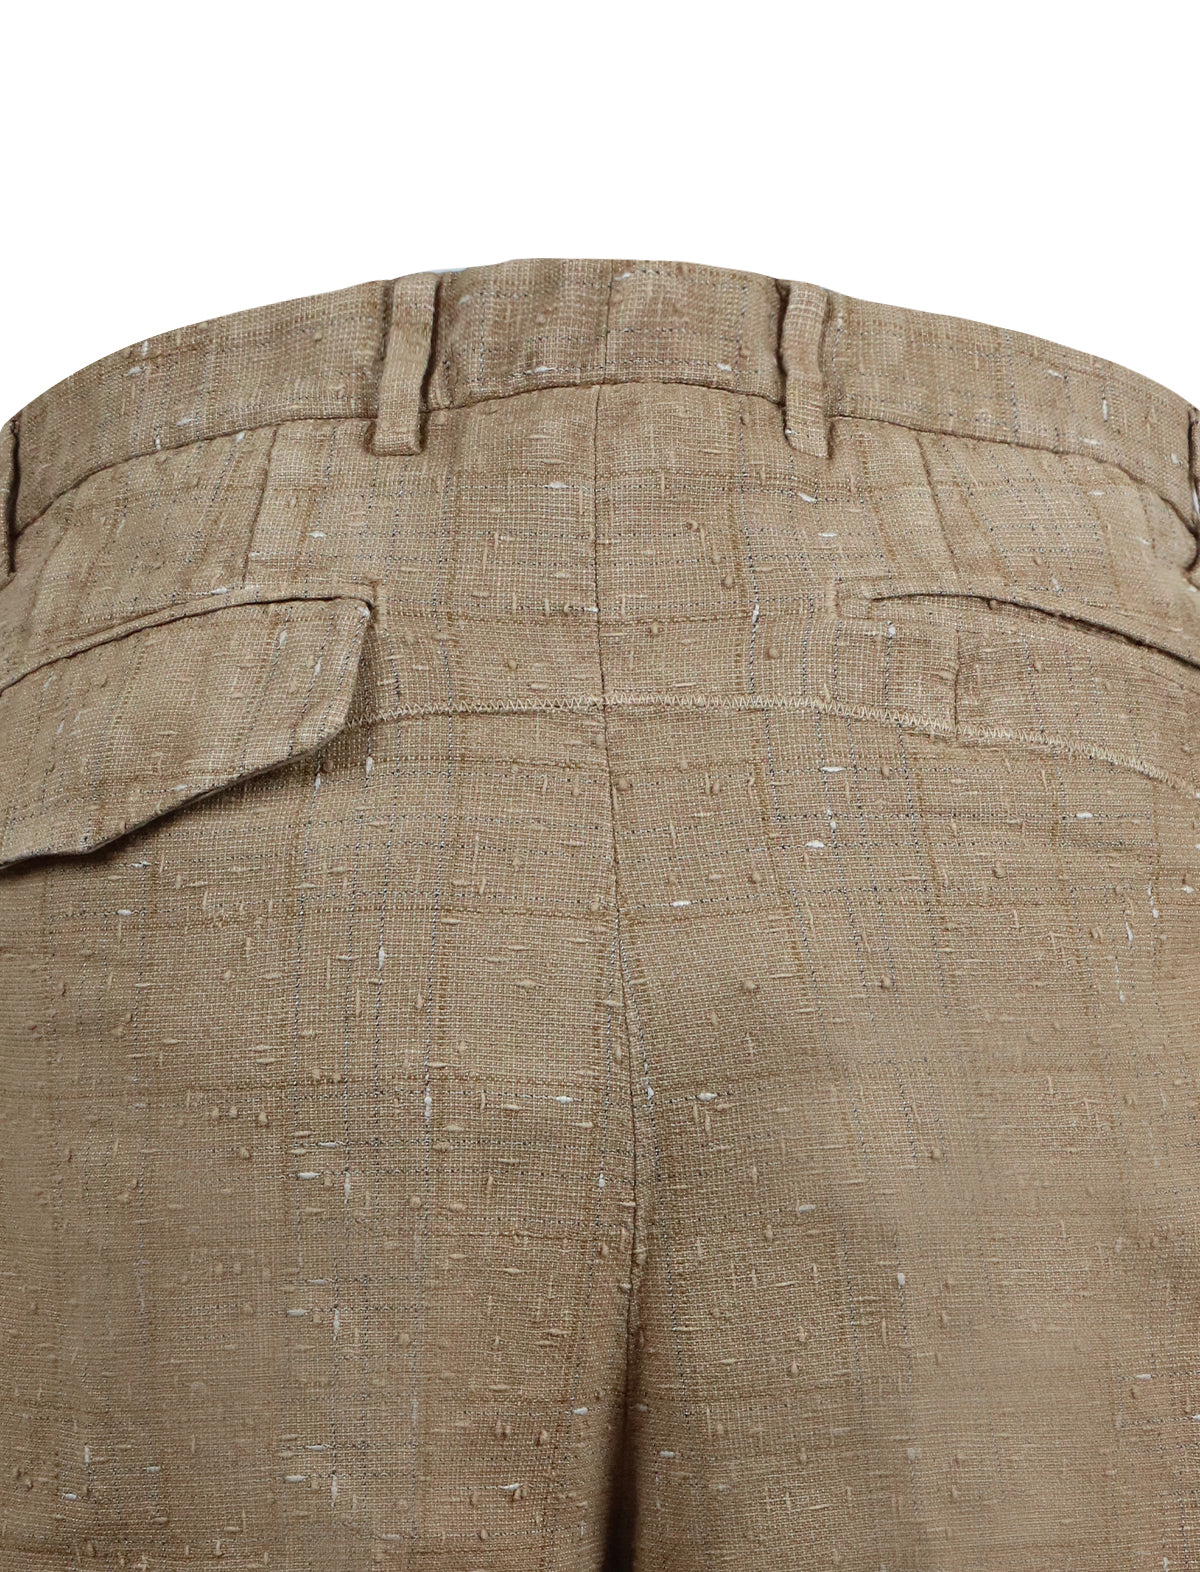 Gabriele Pasini Textured Plaid Trouser in Brown